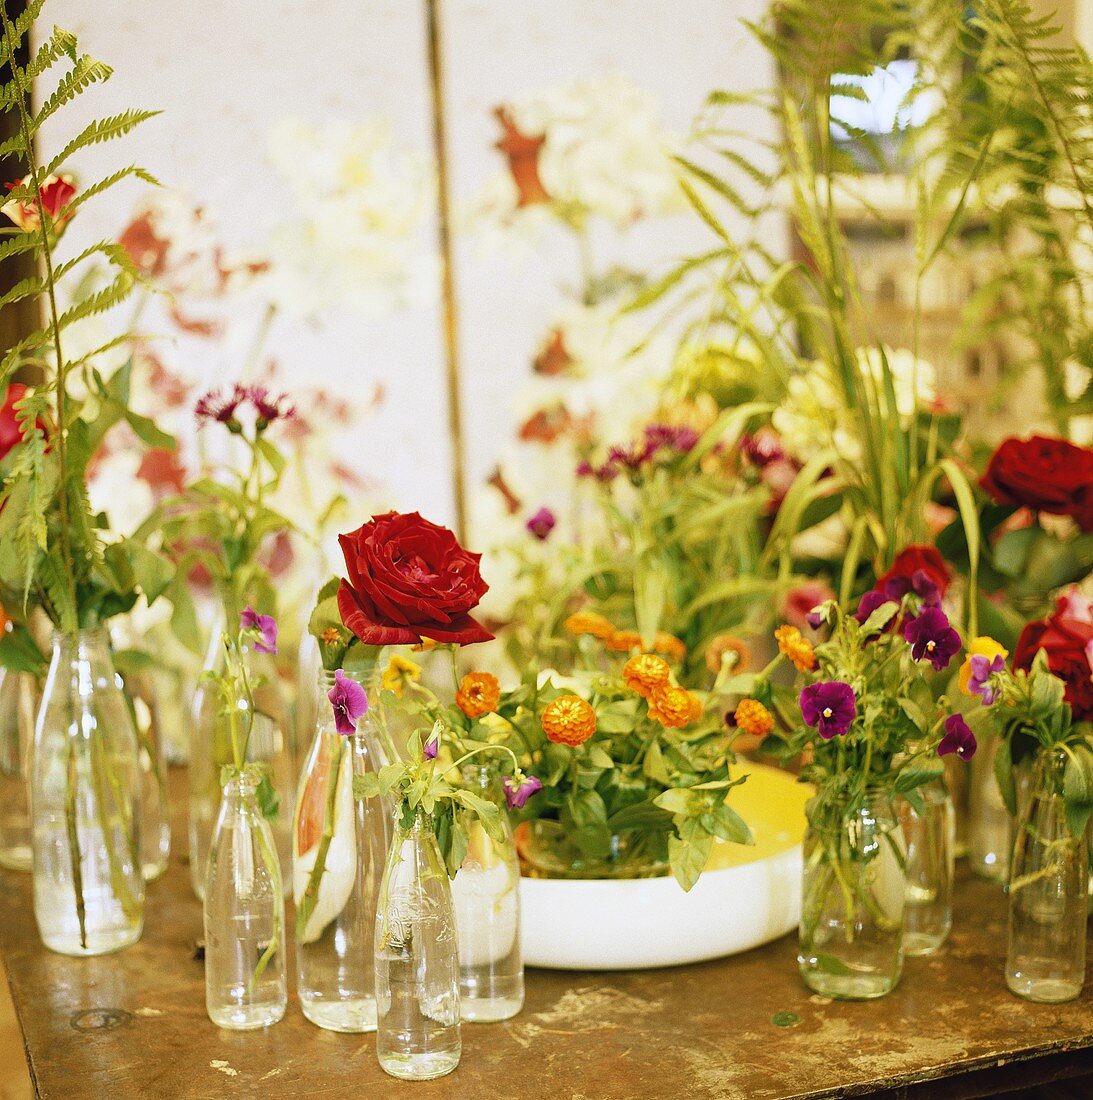 An assortment of flowers in glass bottles